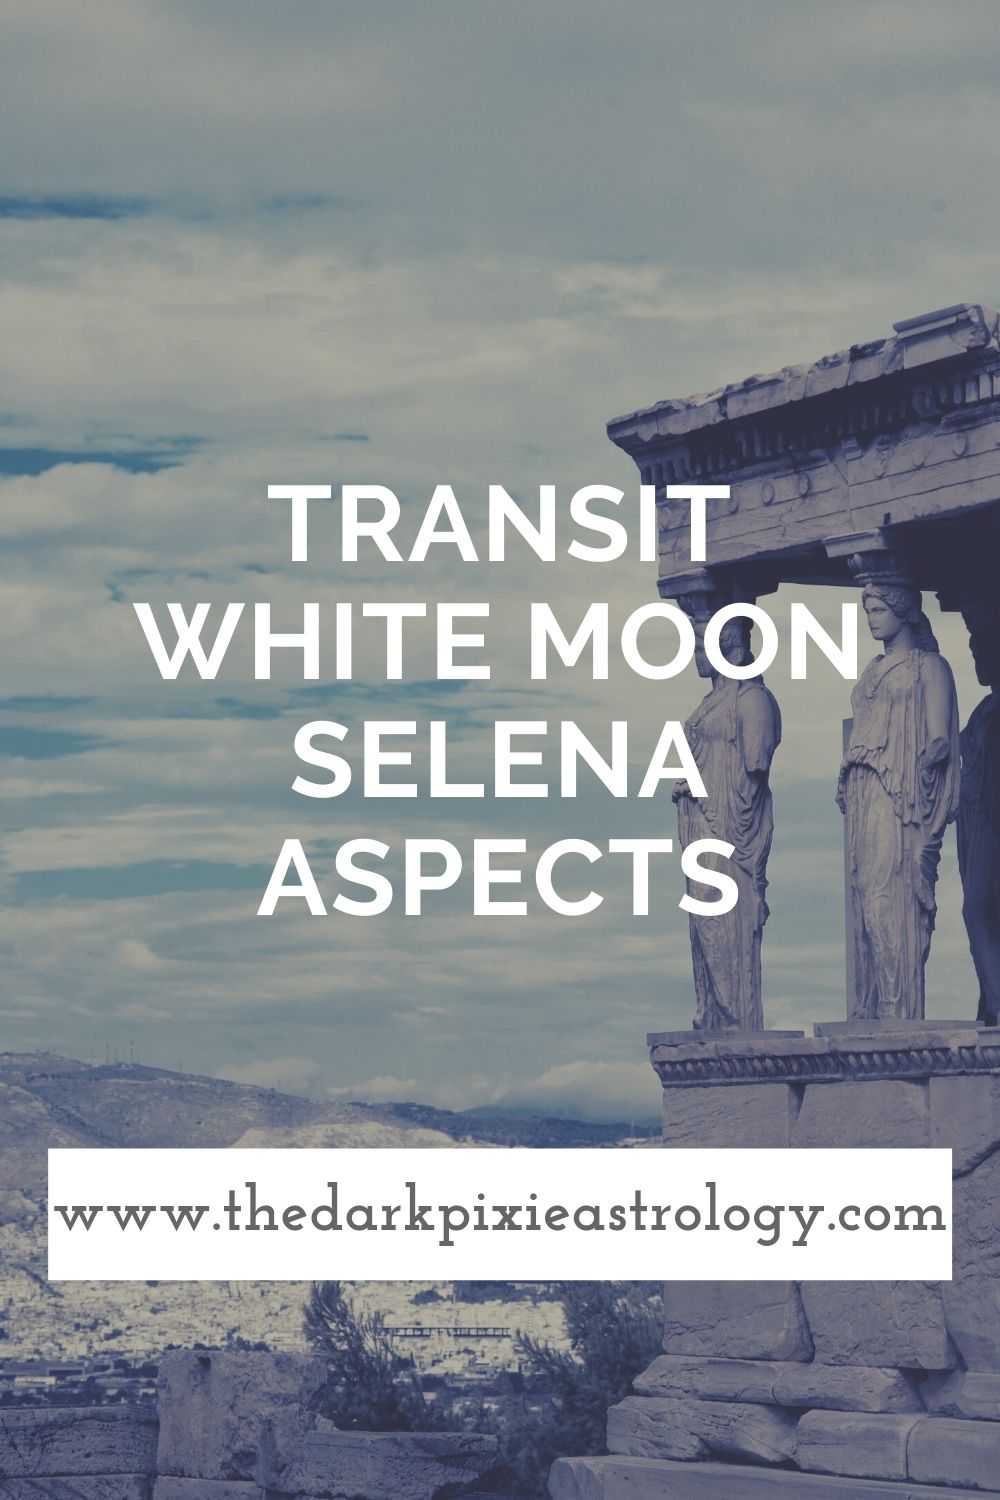 Transit White Moon Selena Aspects - The Dark Pixie Astrology